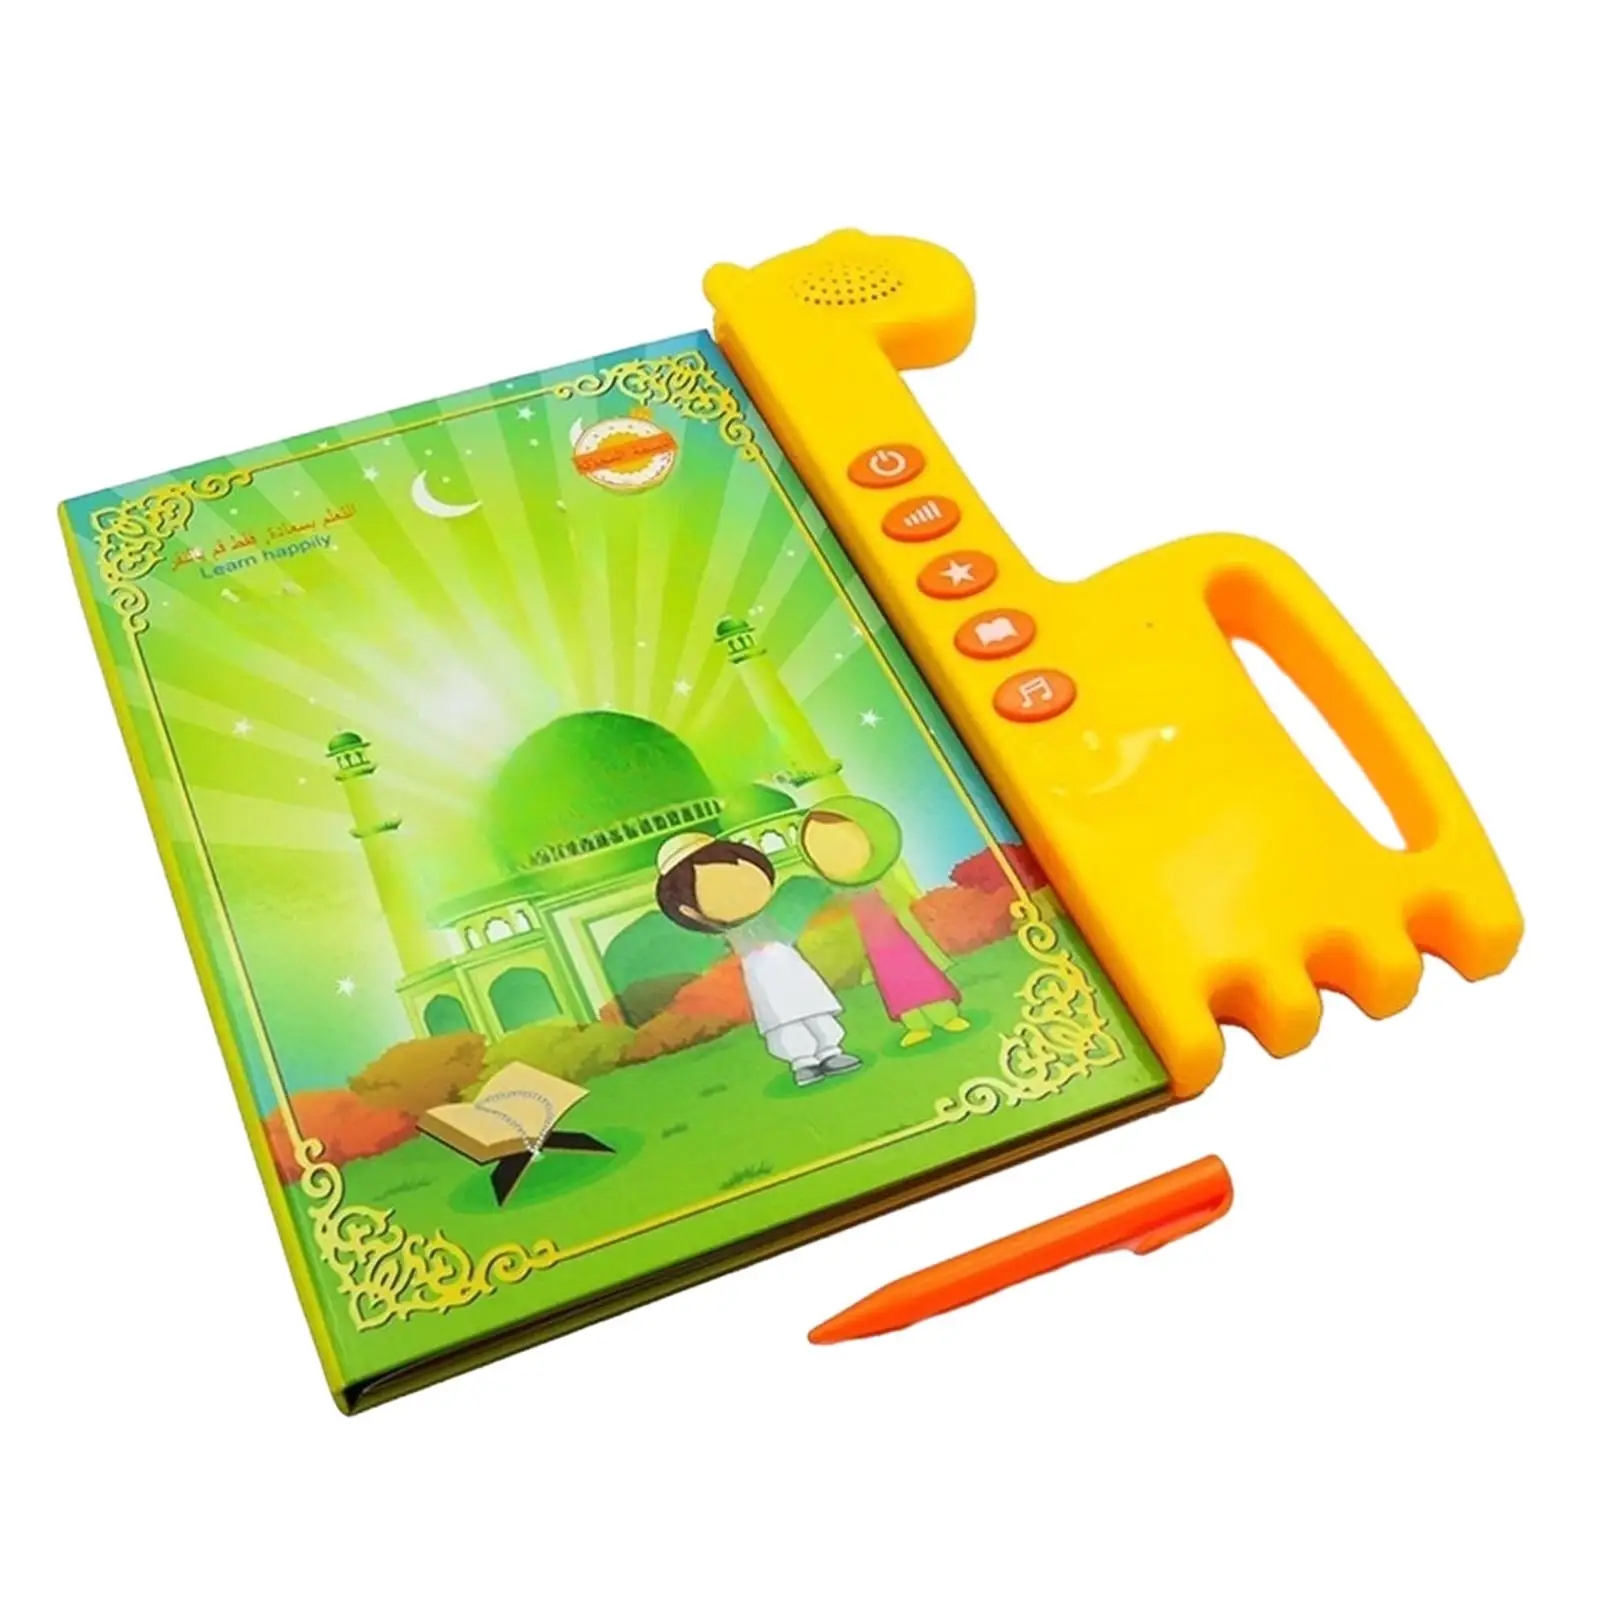 Arabic Learning Machine Portable Audio Book Arabic Word Learning Developmental Toys Multifunction for Children Kids Gift Girls